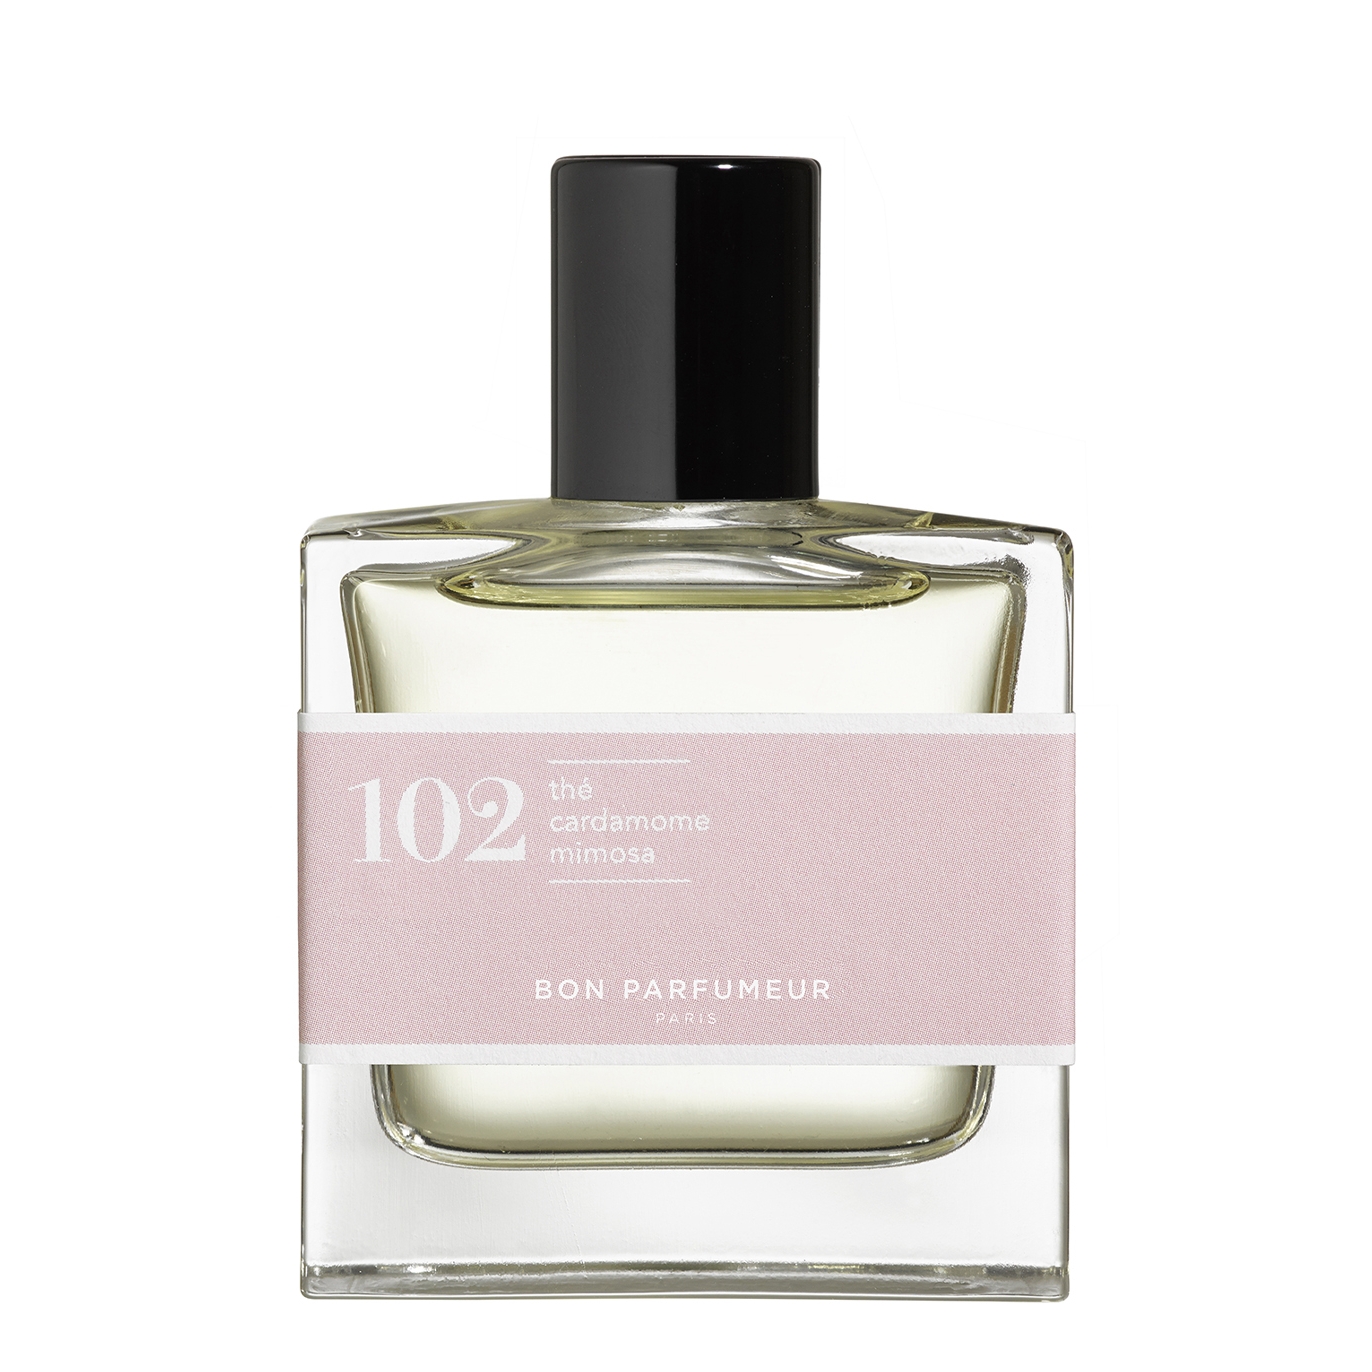 Bon Parfumeur 102 Tea Cardamom Mimosa Eau De Parfum 30ml